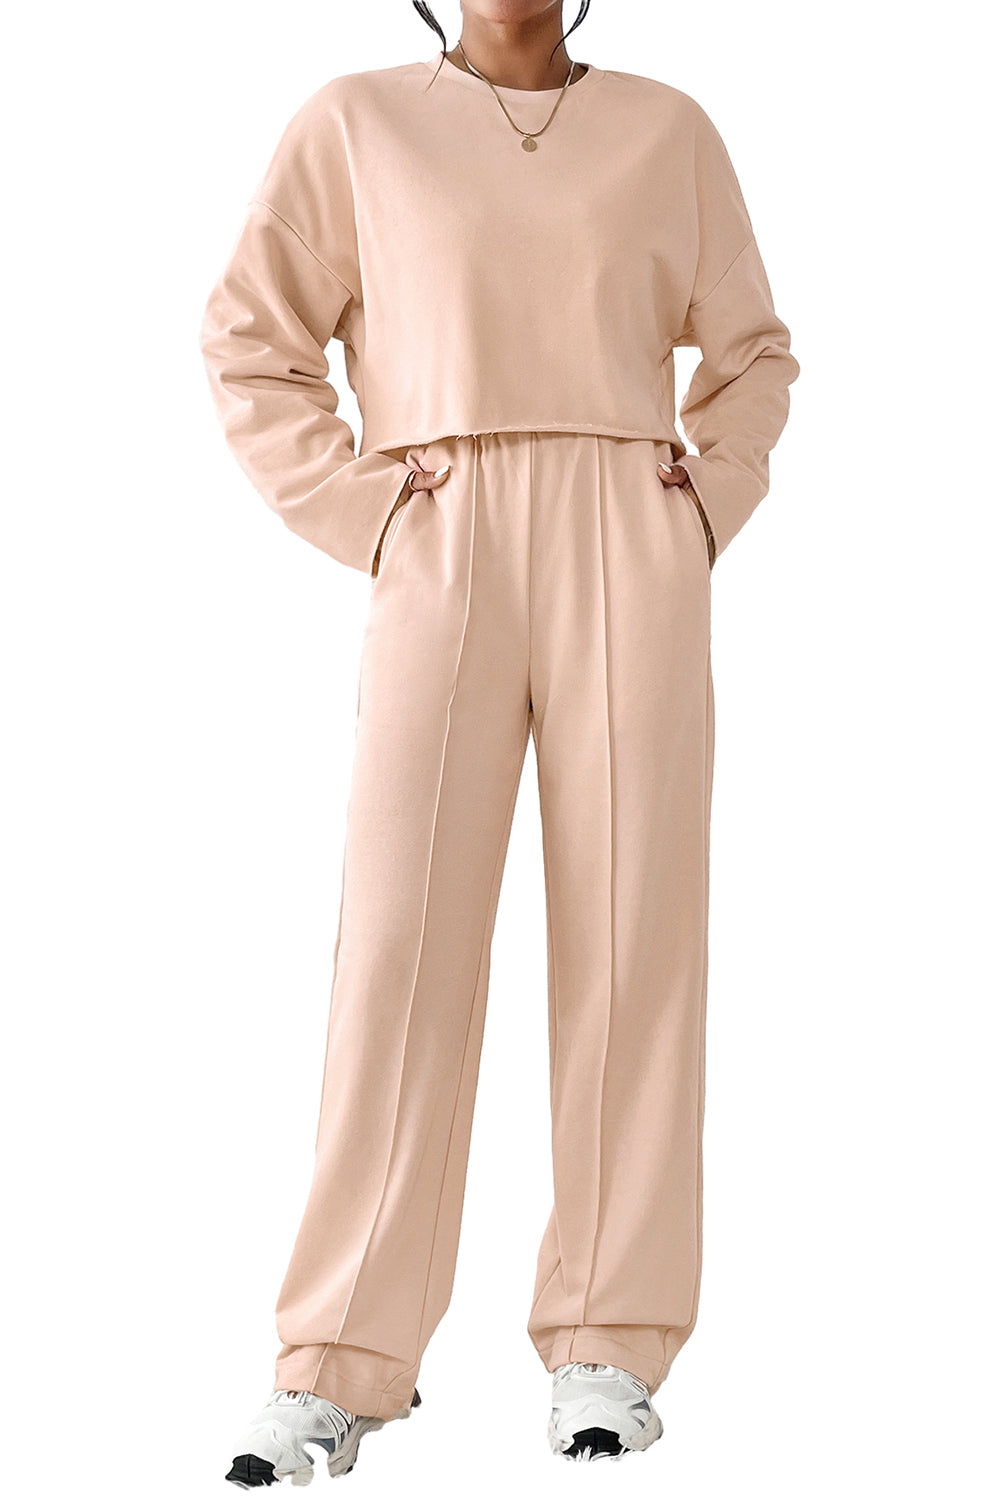 Khaki Long Sleeve Distressed Crop Top Wide Leg Pants Outfit